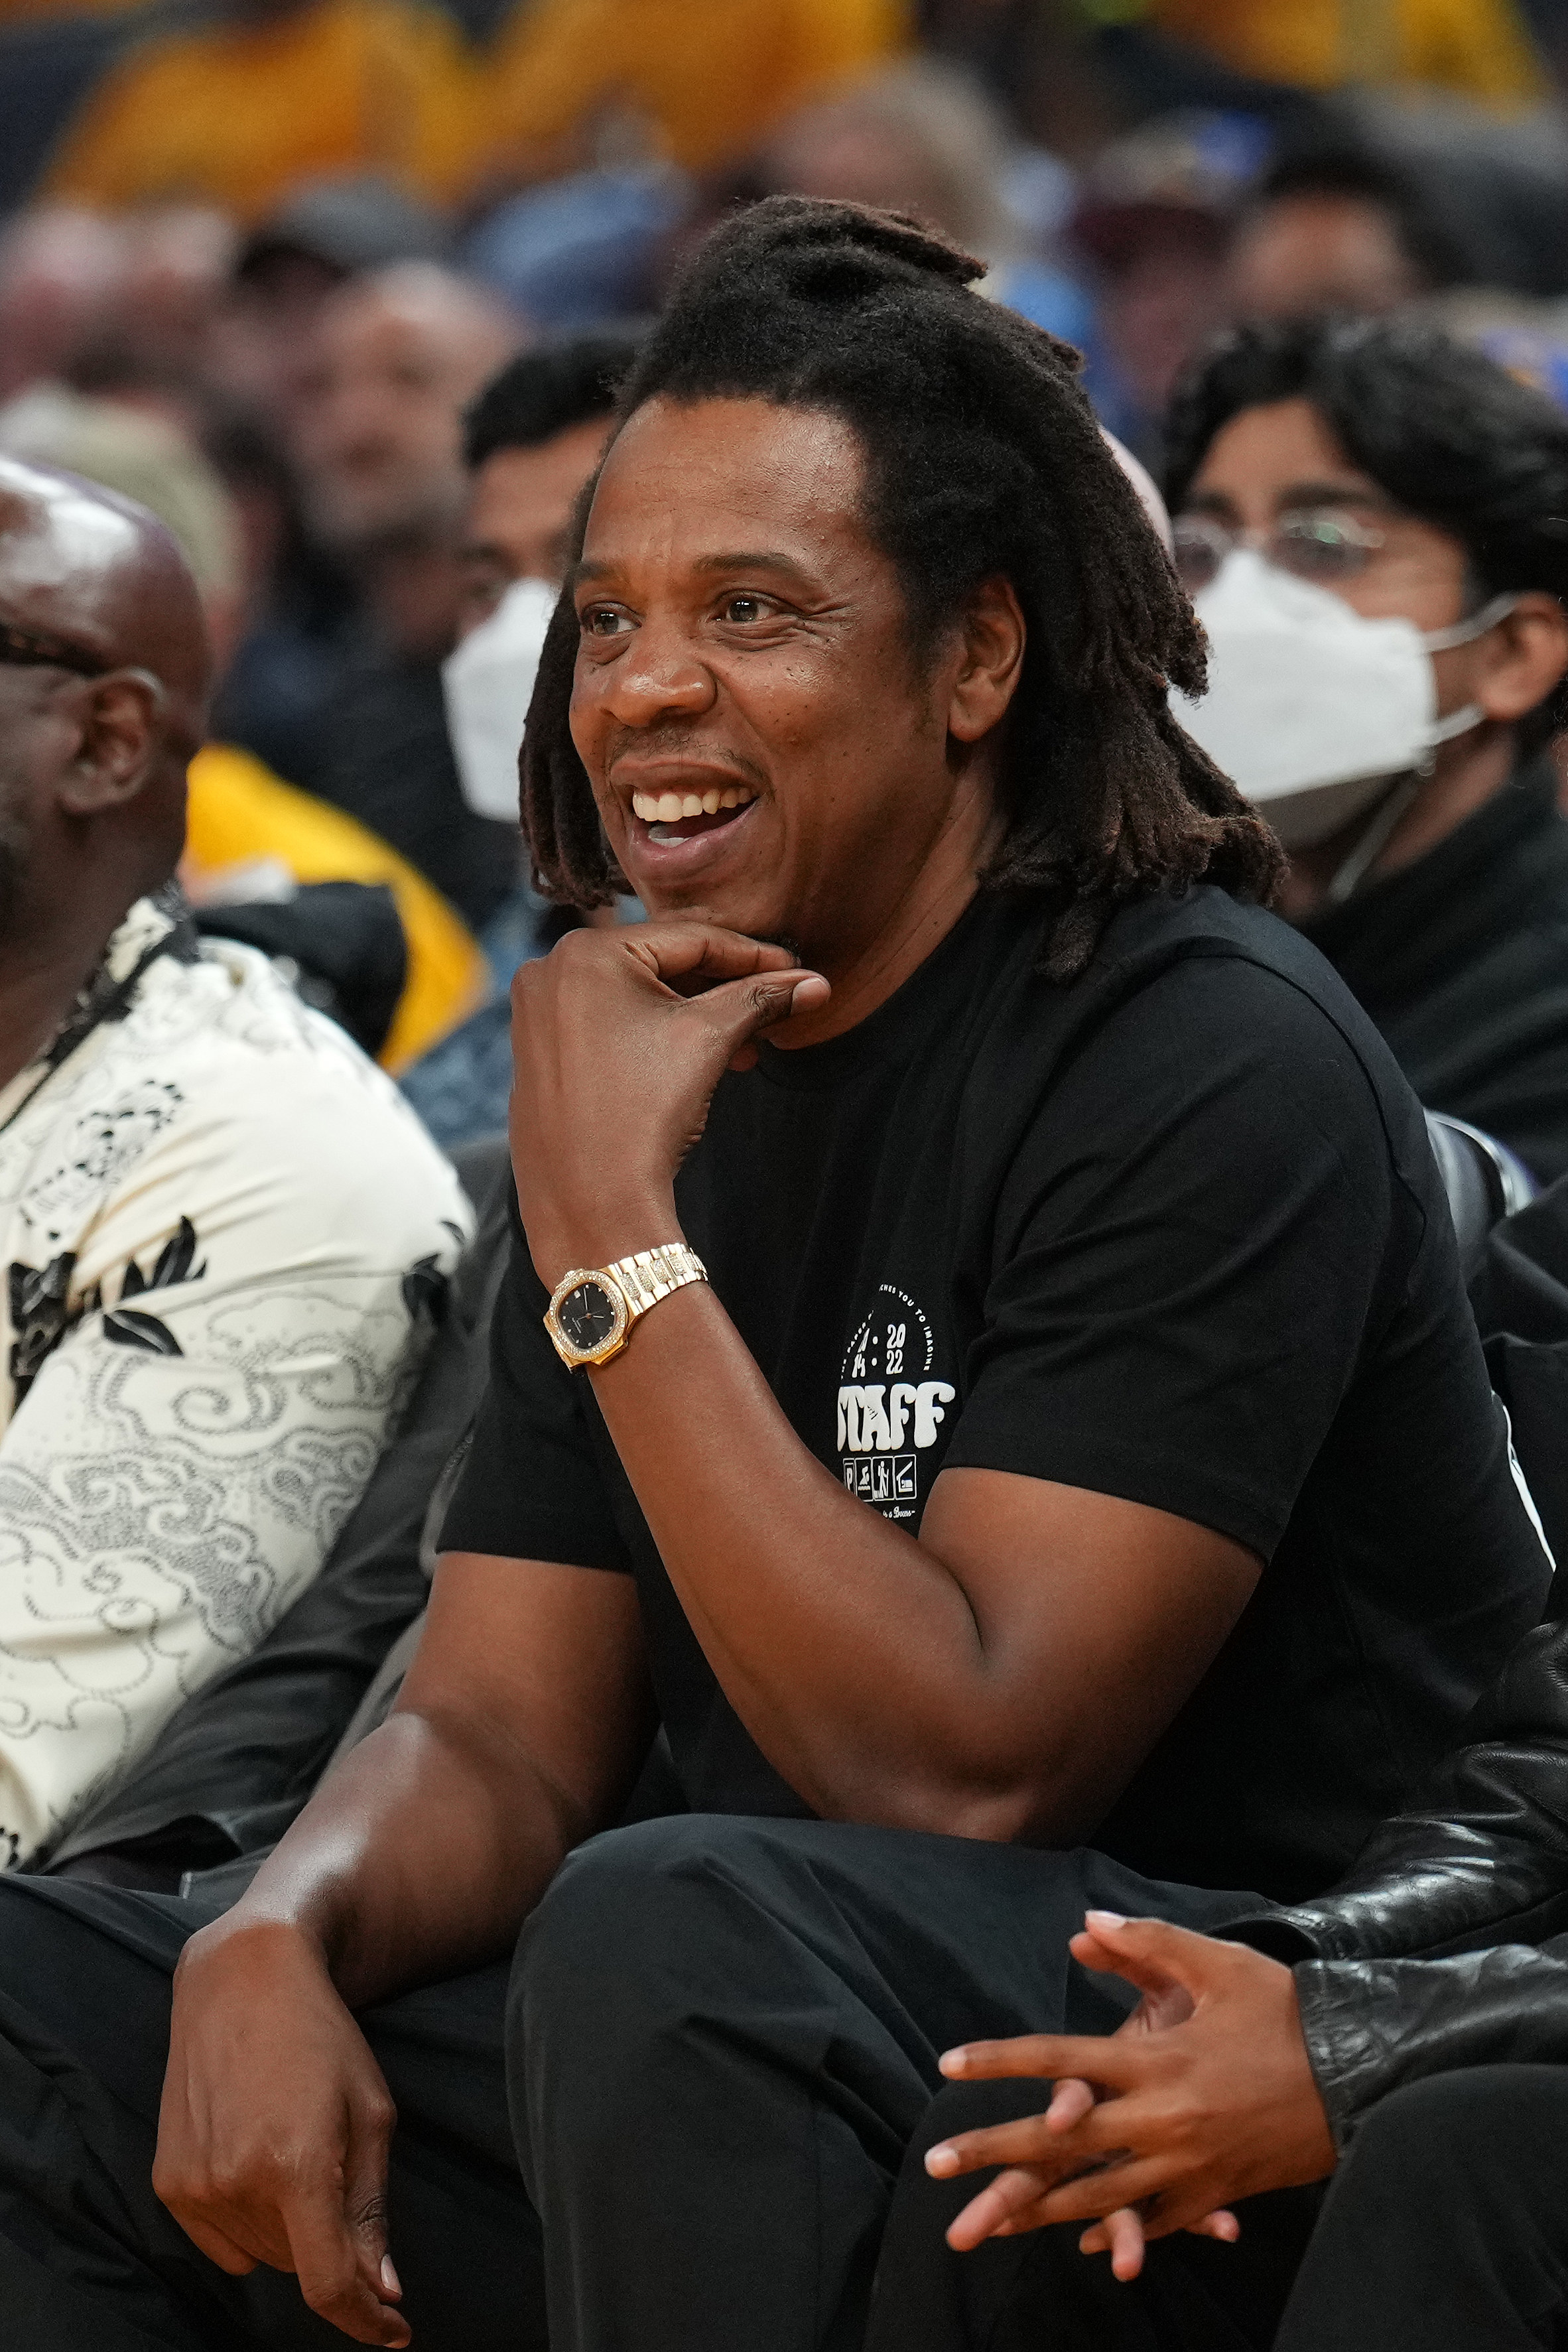 Jay-Z at a basketball game